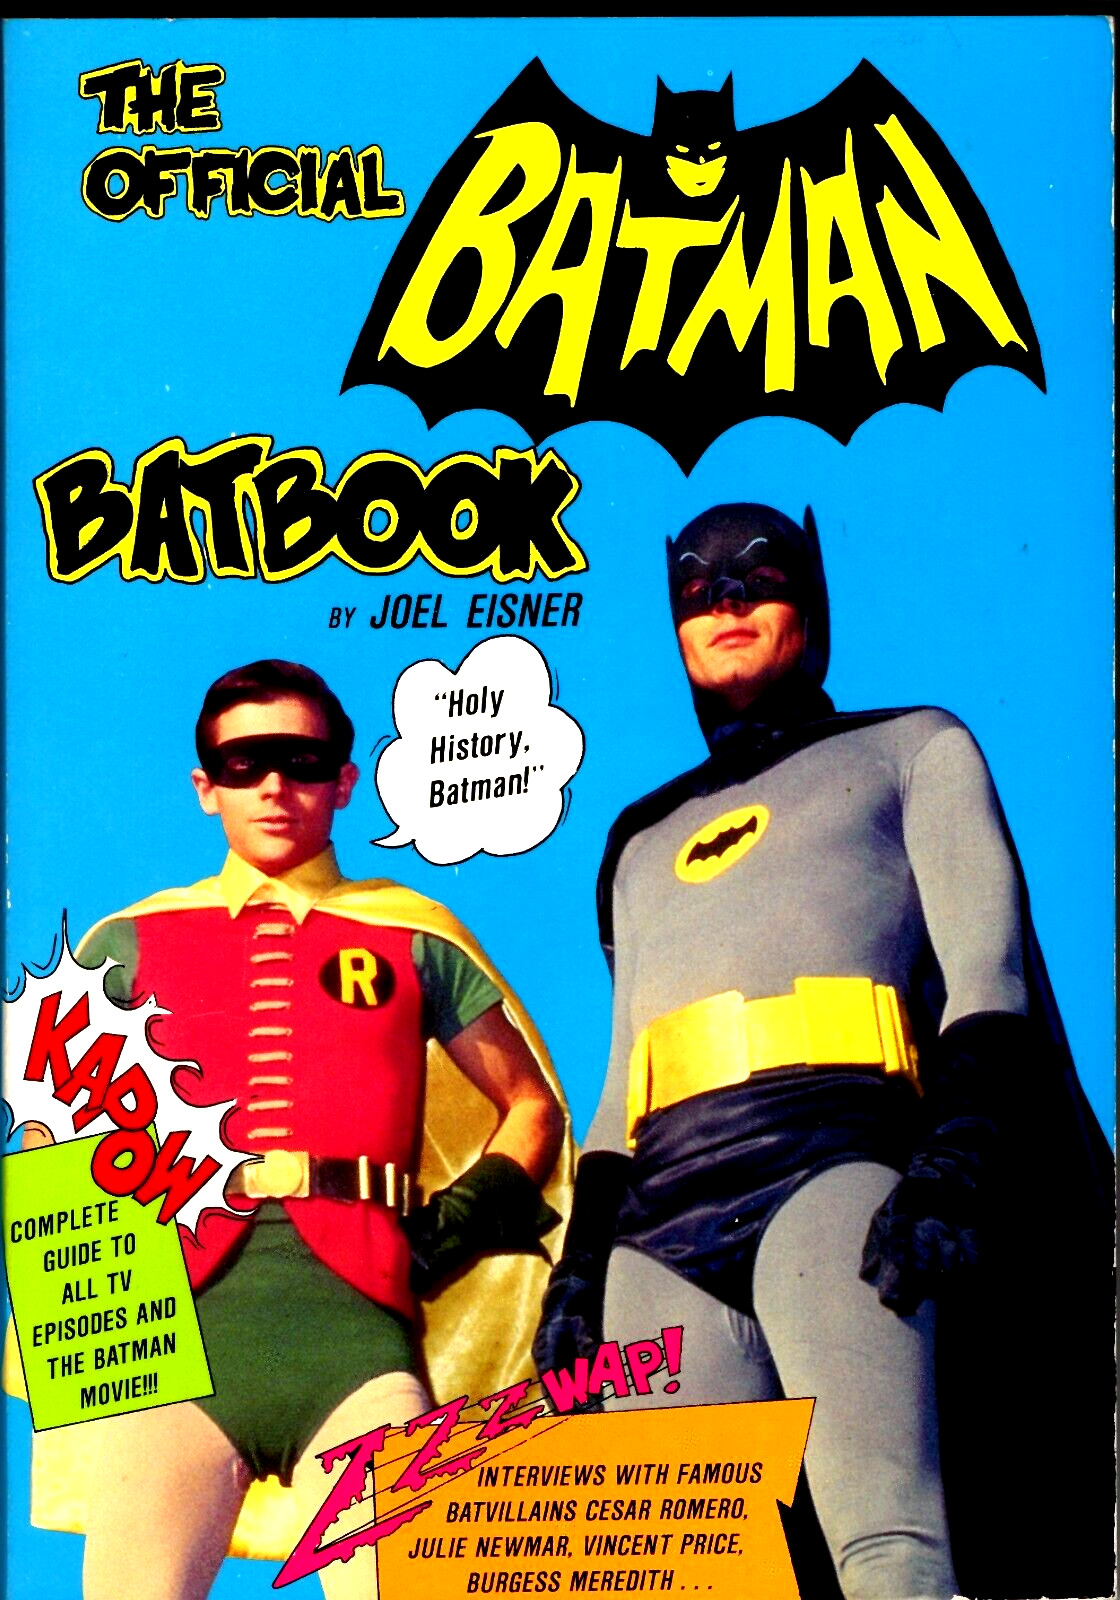 The Official Batman Batbook book by Joel Eisner 1986 / 3 Season\'s Episodes Guide